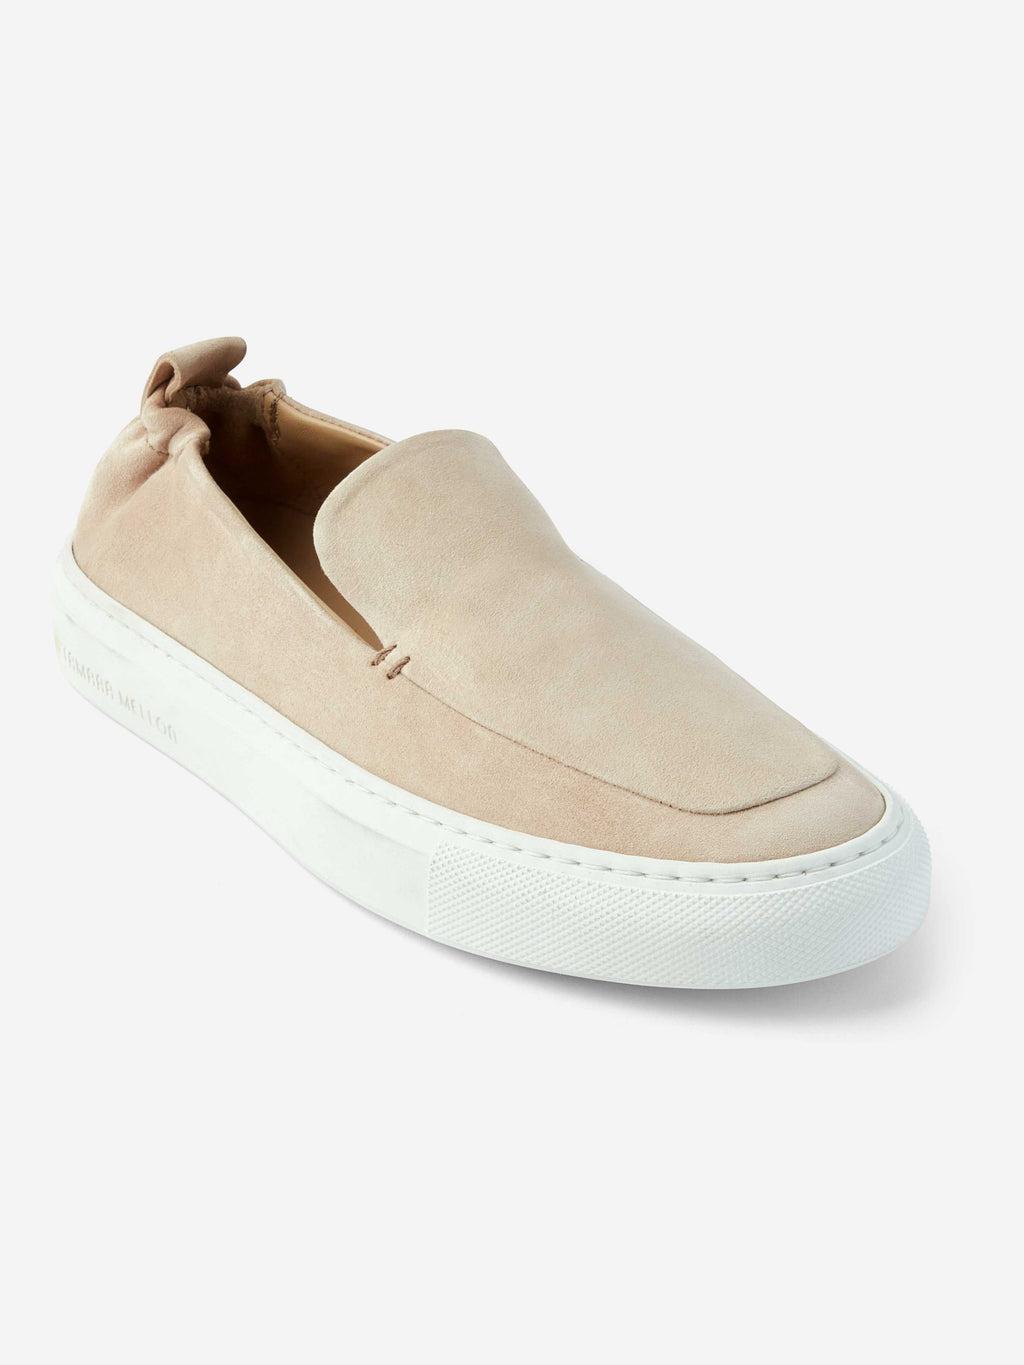 Tamara Mellon Stow Sneaker Sneakers in White | Lyst